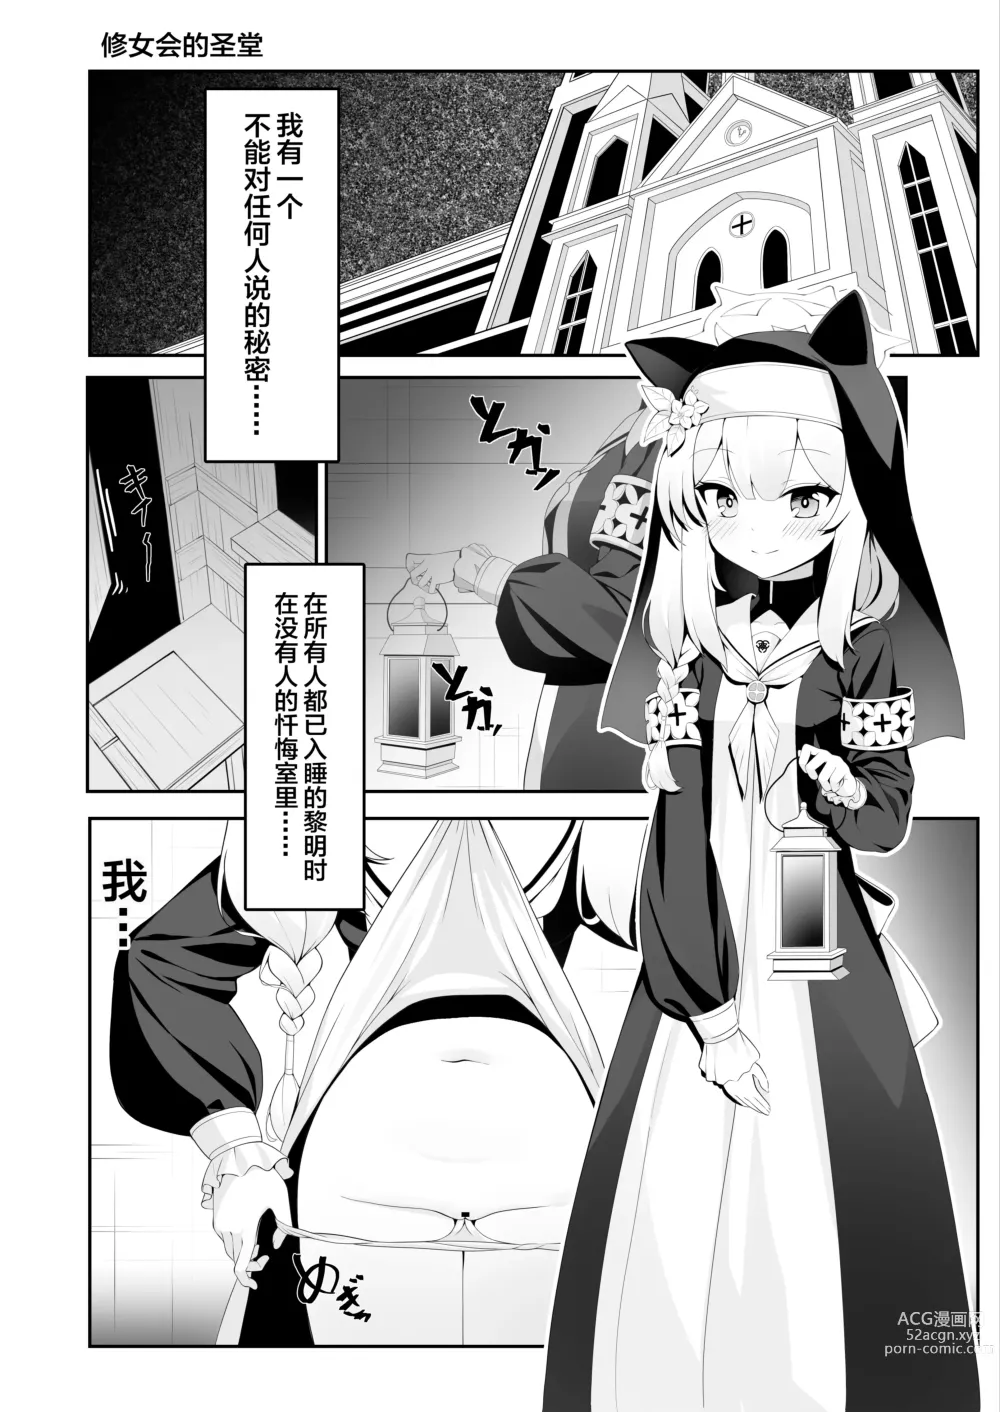 Page 5 of doujinshi Mari no Himitsu